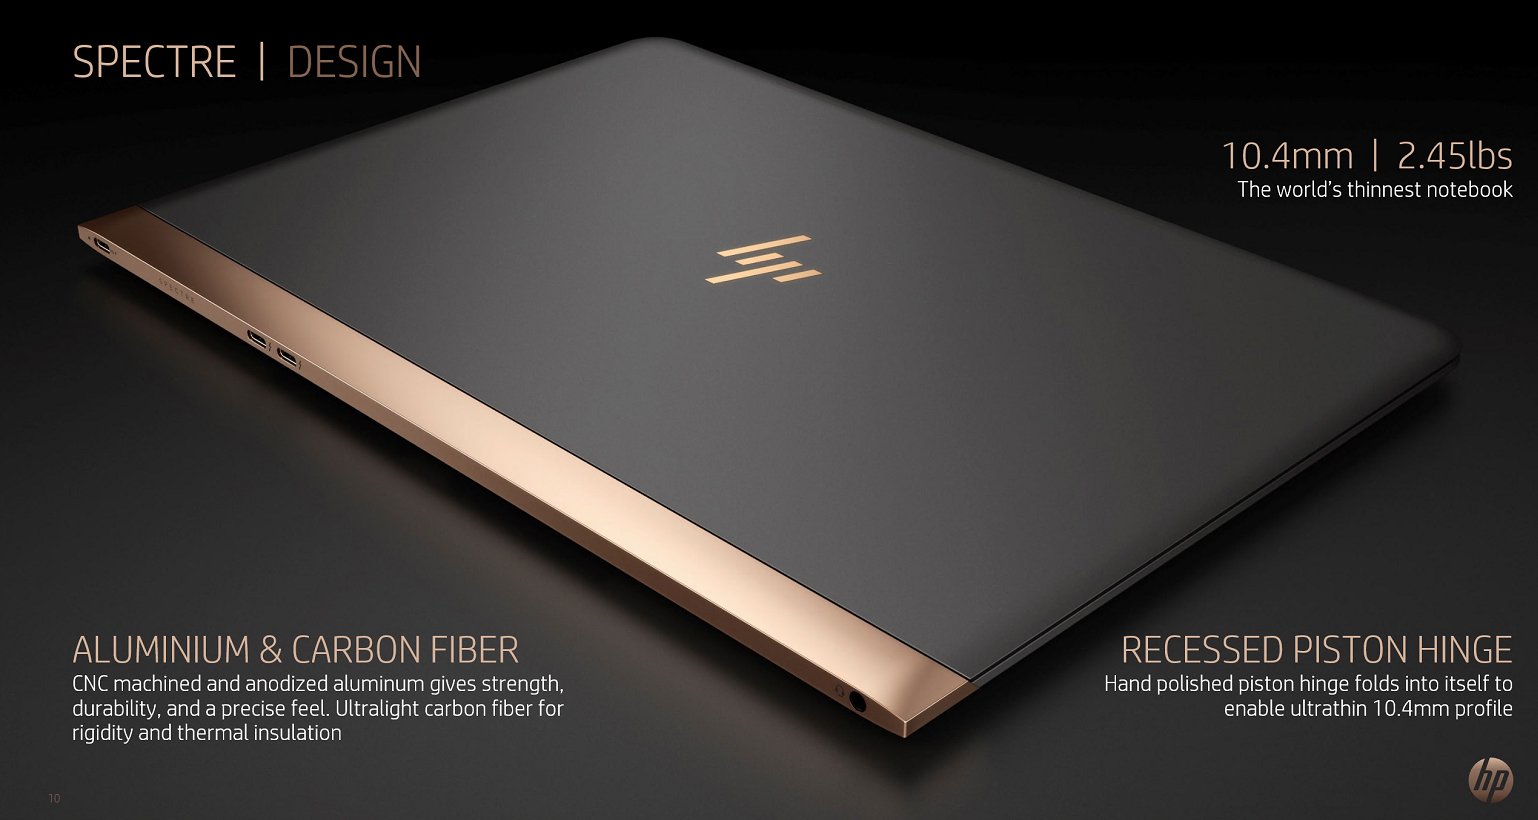 HP Spectre 13 'World's Thinnest Laptop' Announced In India - MSPoweruser